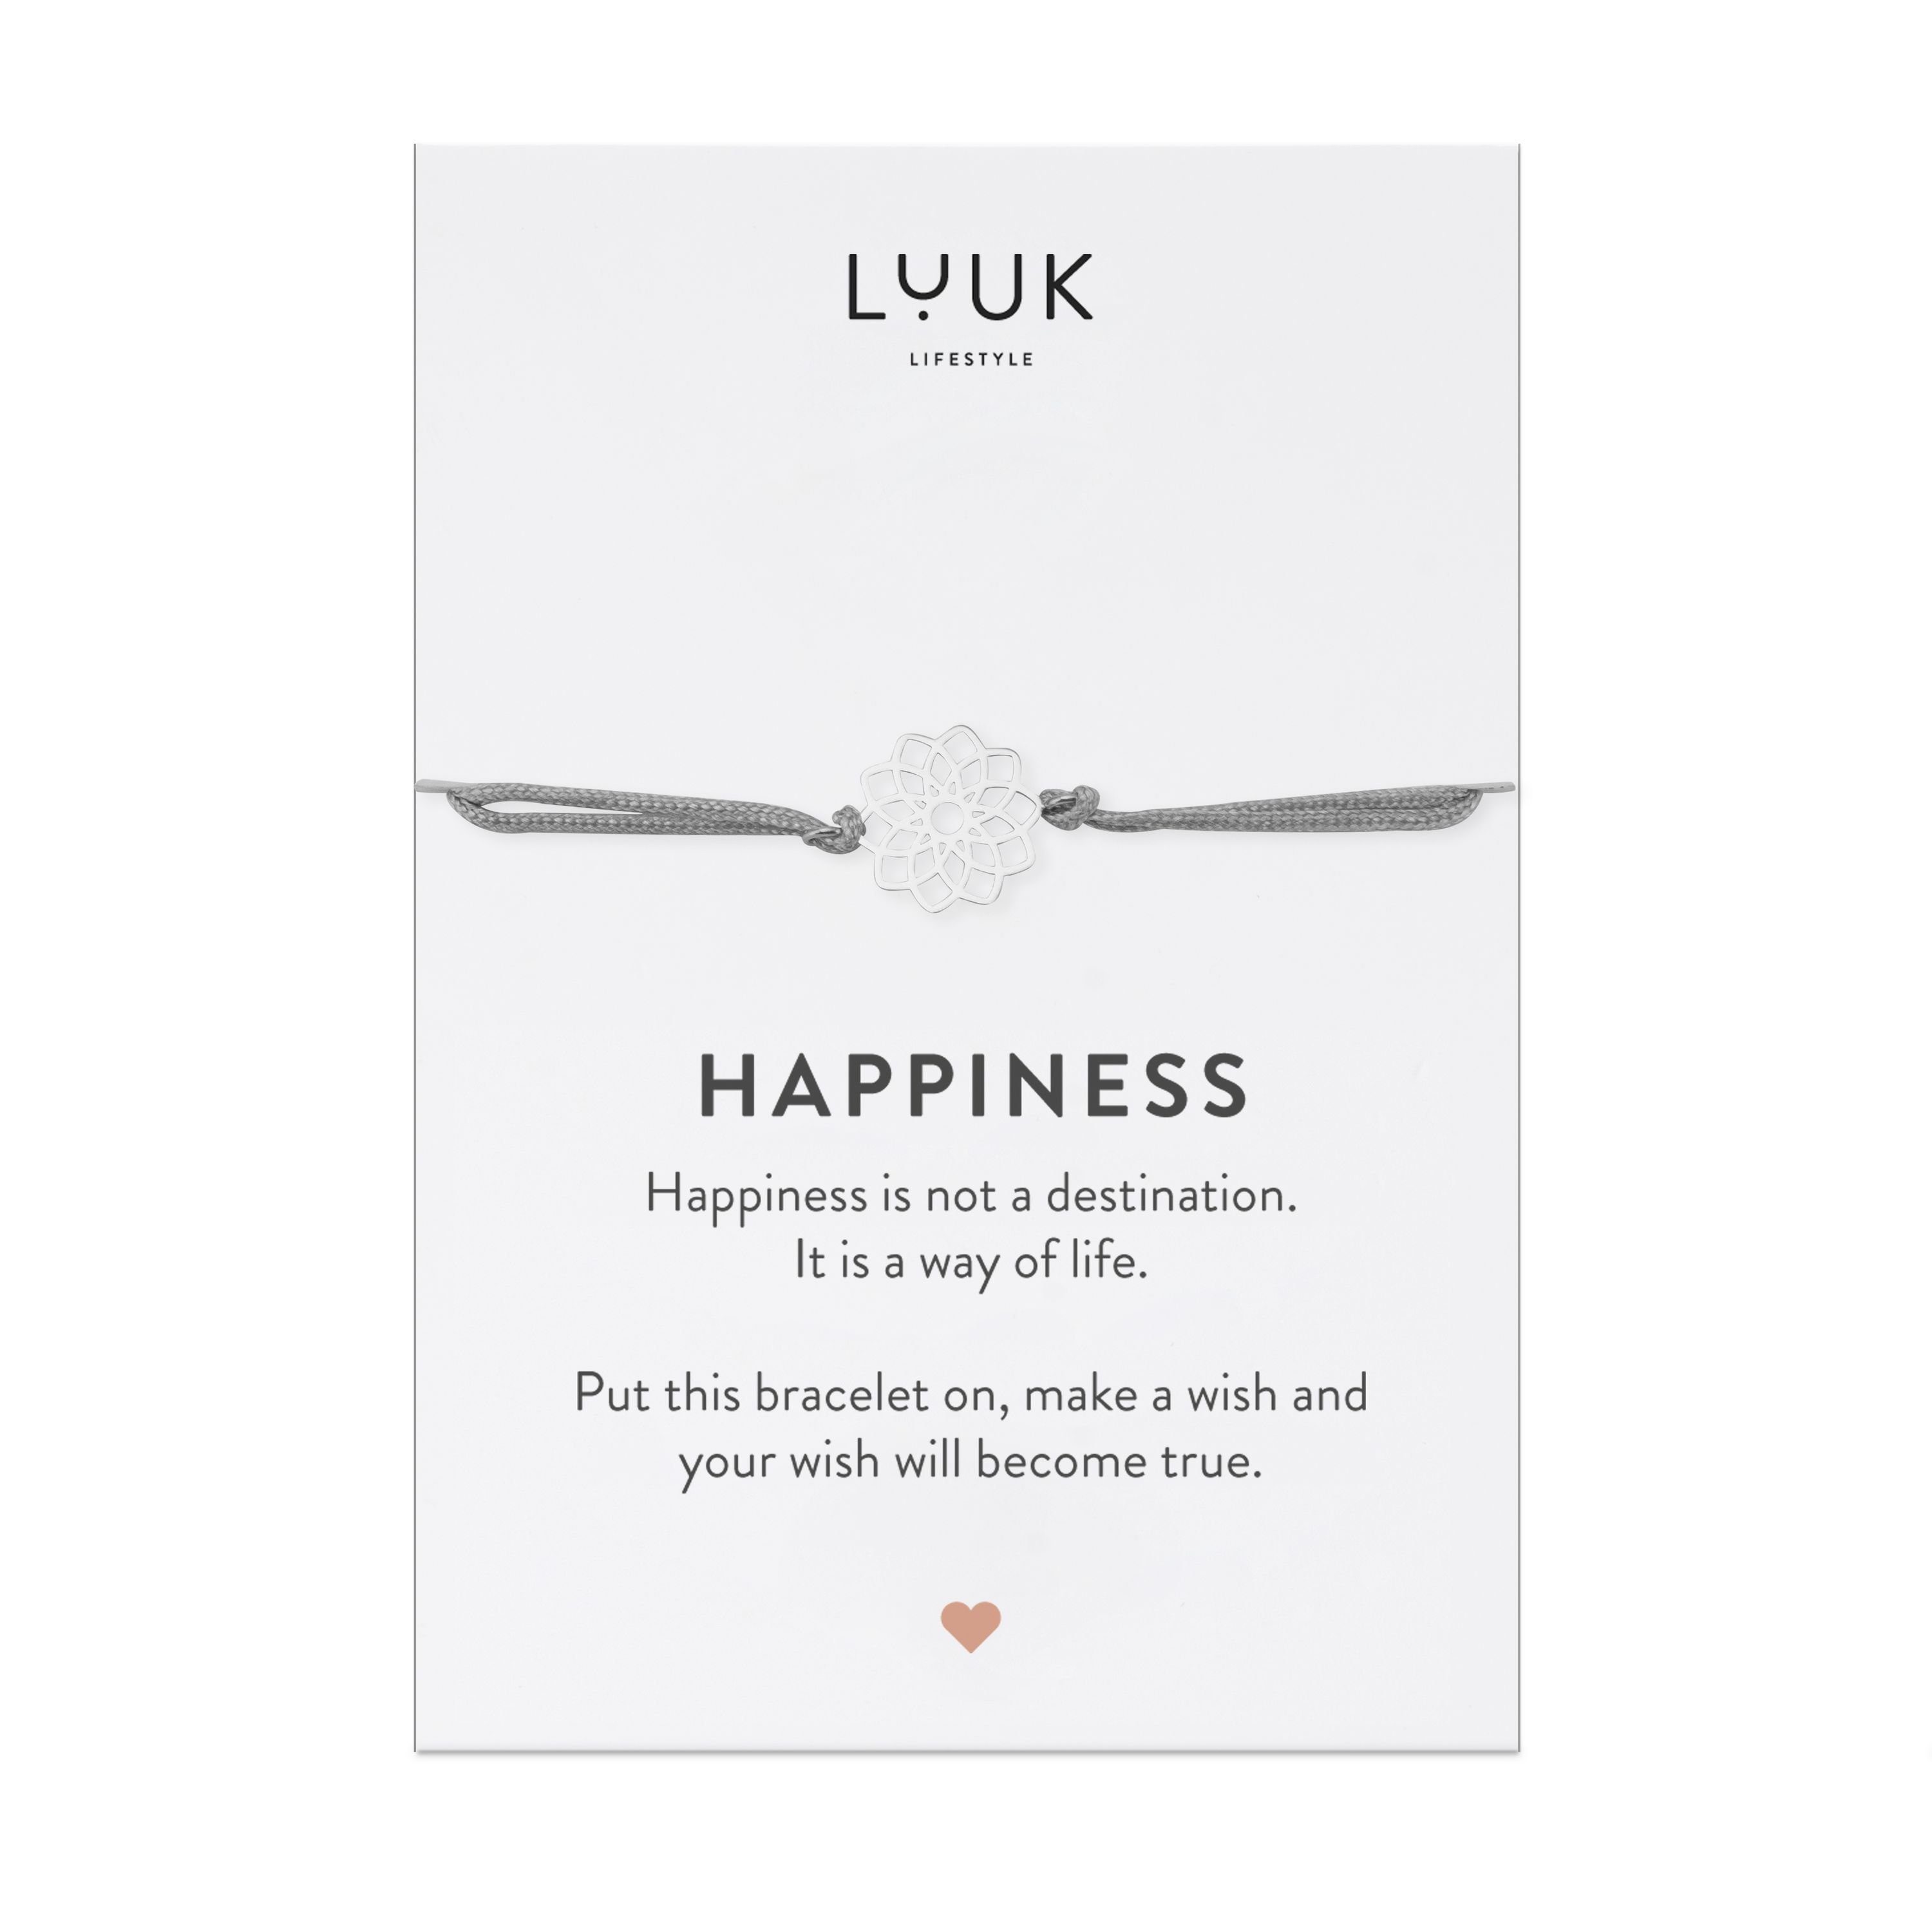 LUUK LIFESTYLE Happiness mit Freundschaftsarmband Mandala, handmade, Silber Spruchkarte